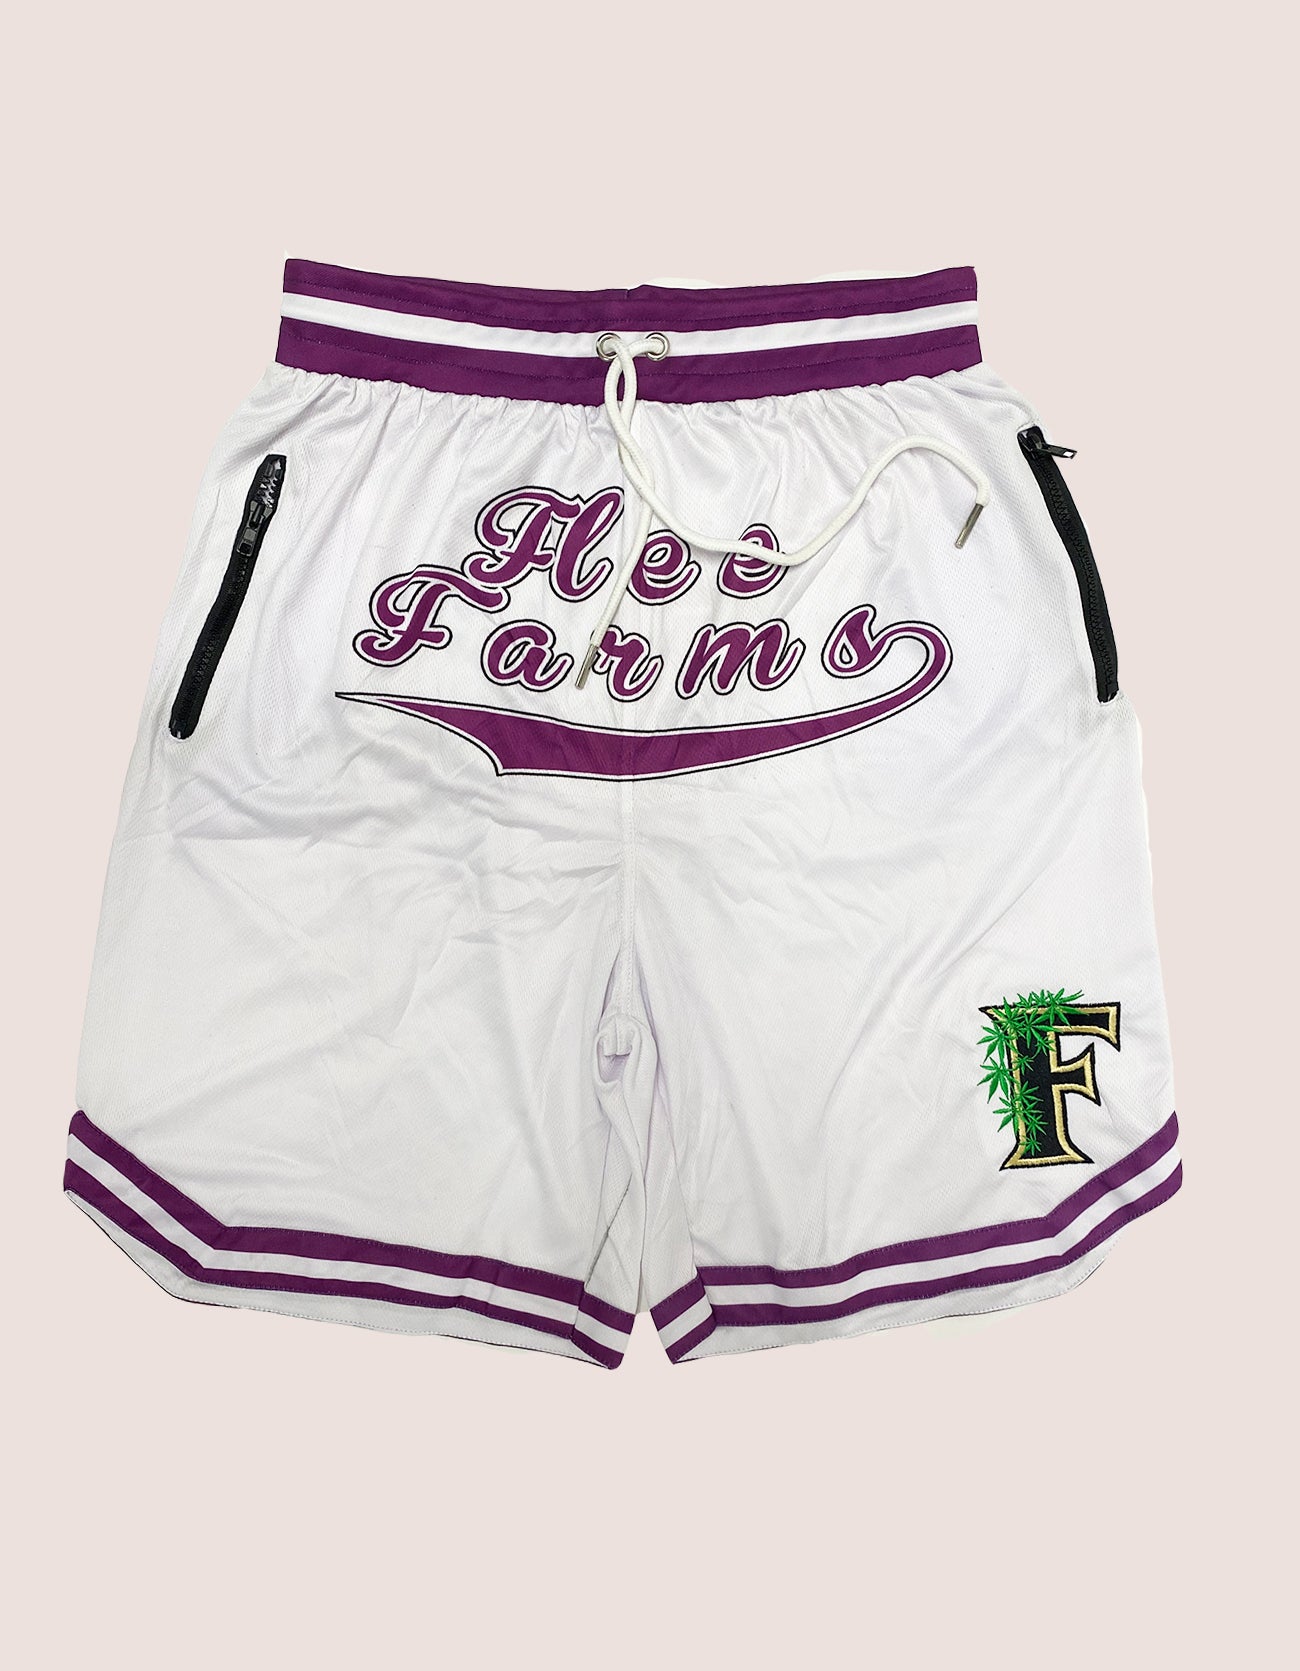 Flee Farms BB shorts White / Purple